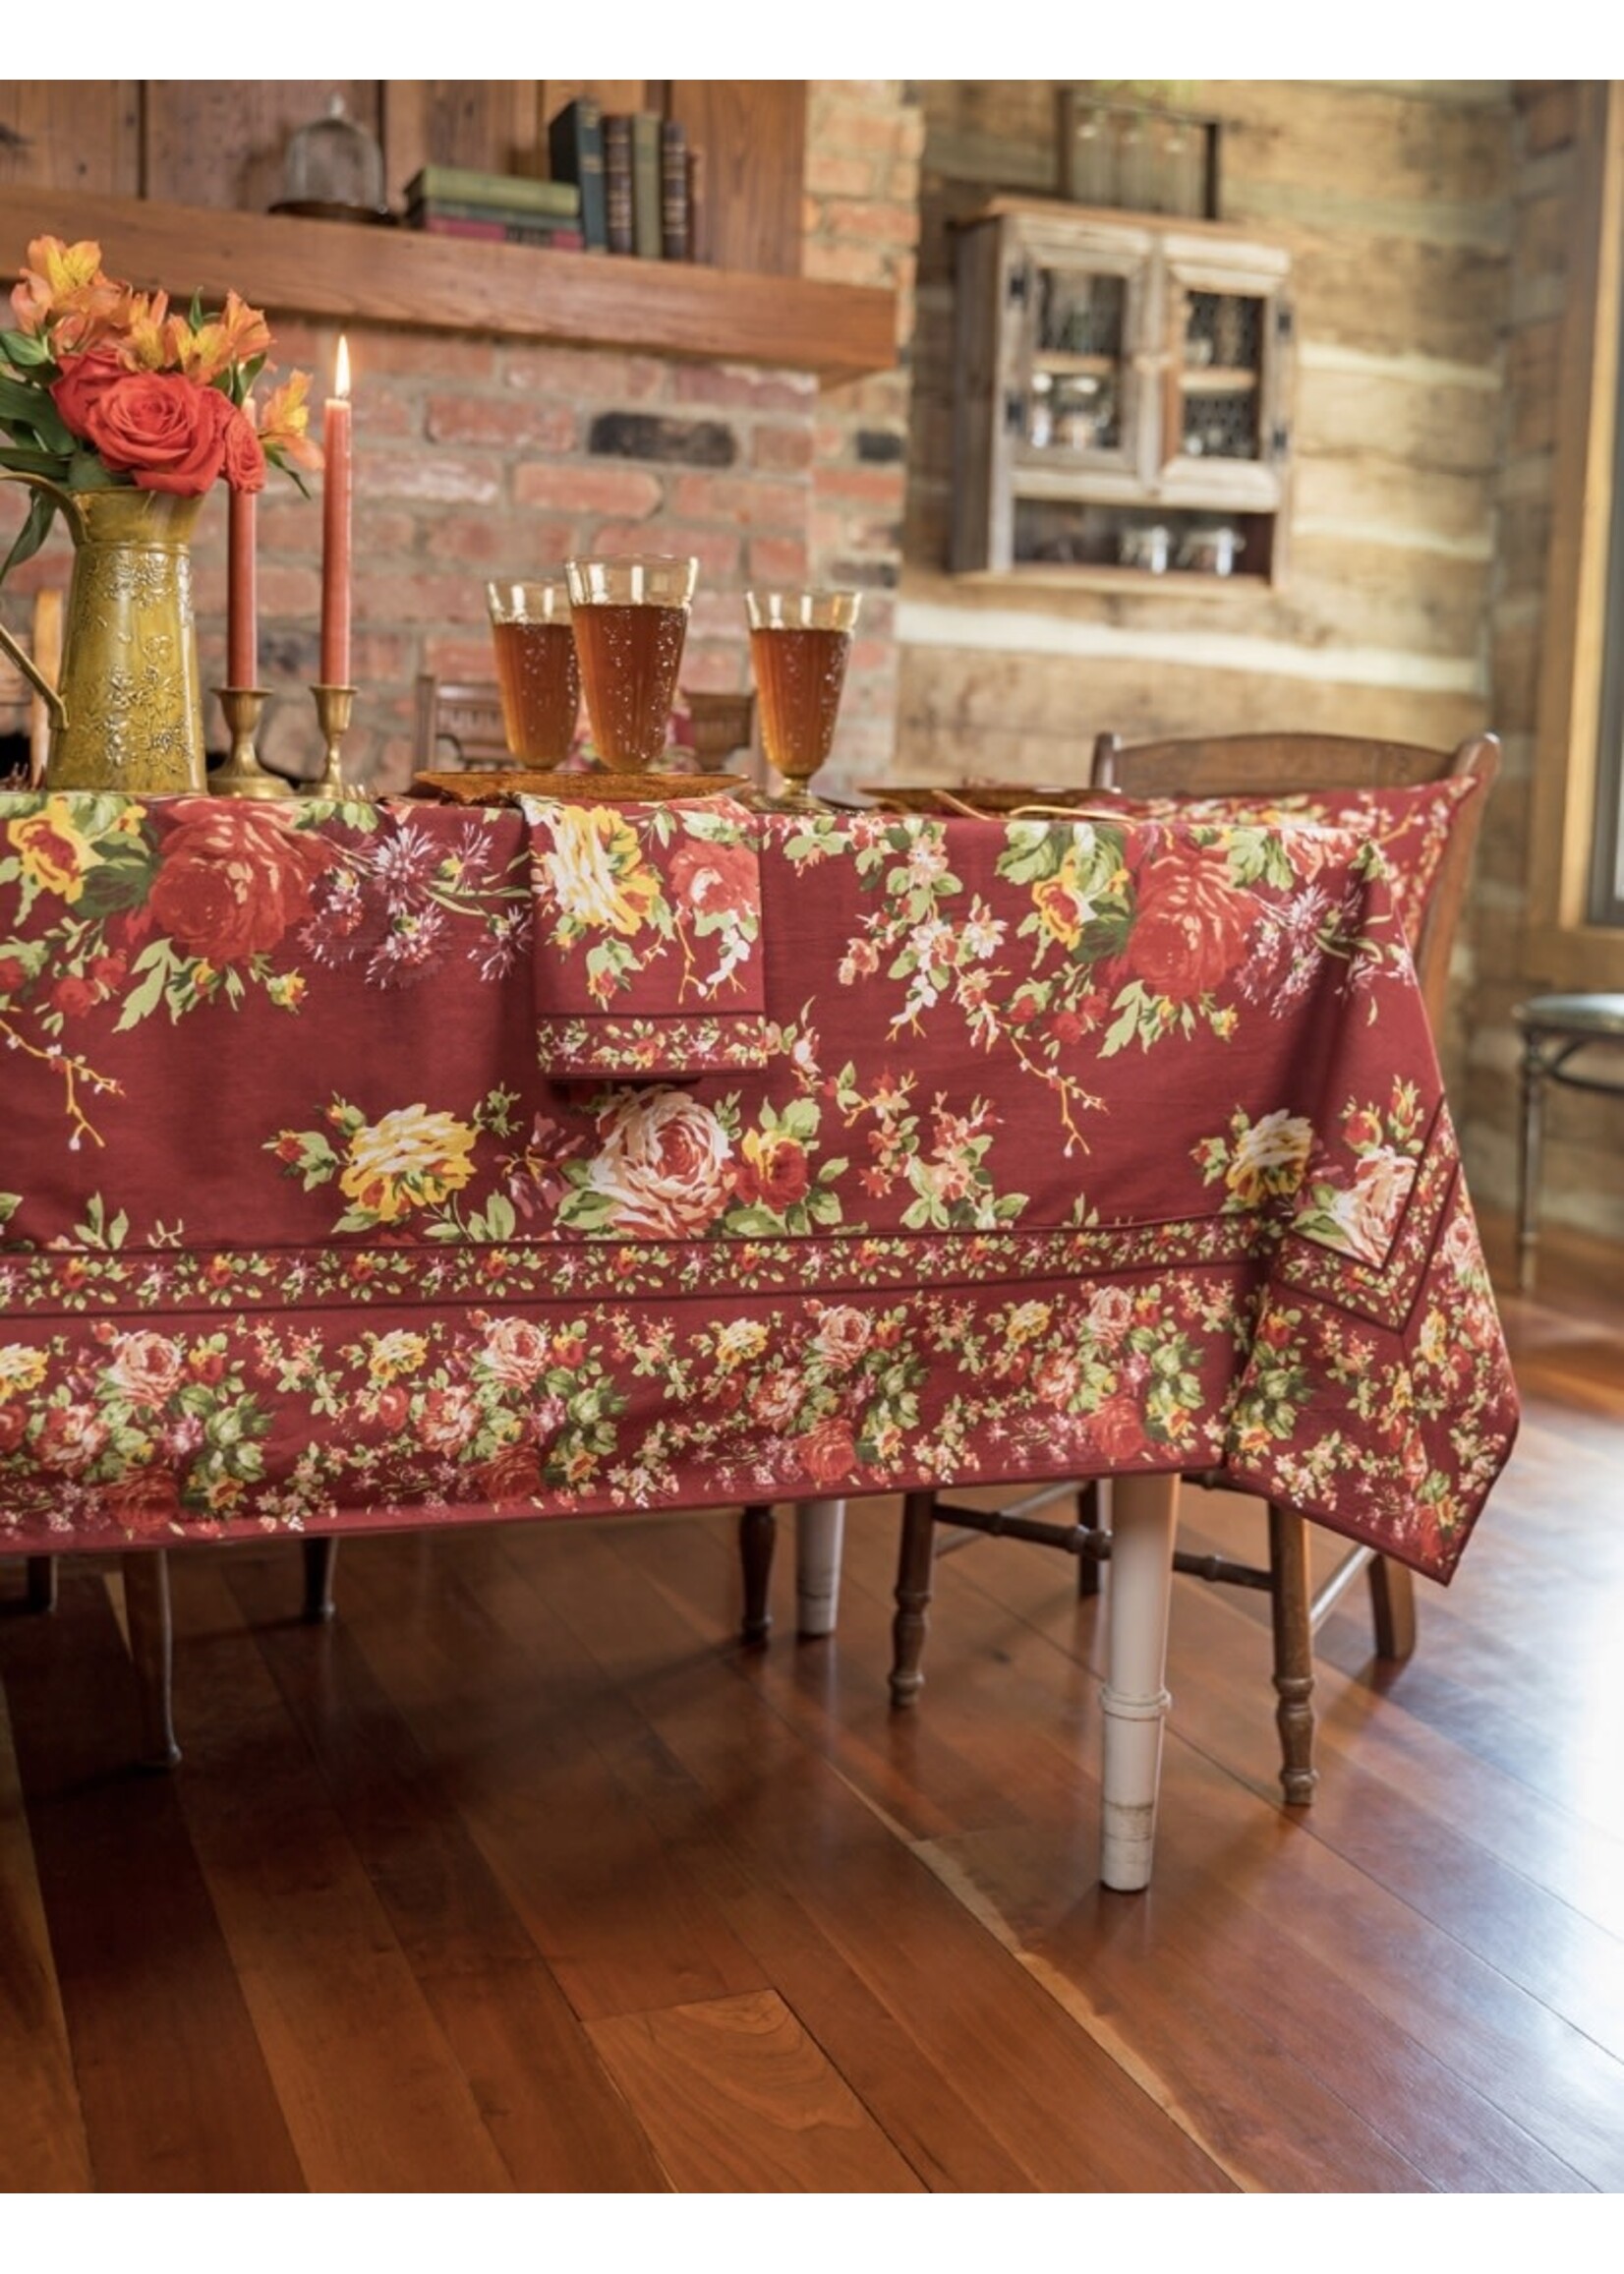 April Cornell Cottage Rose Tablecloth - Autumn